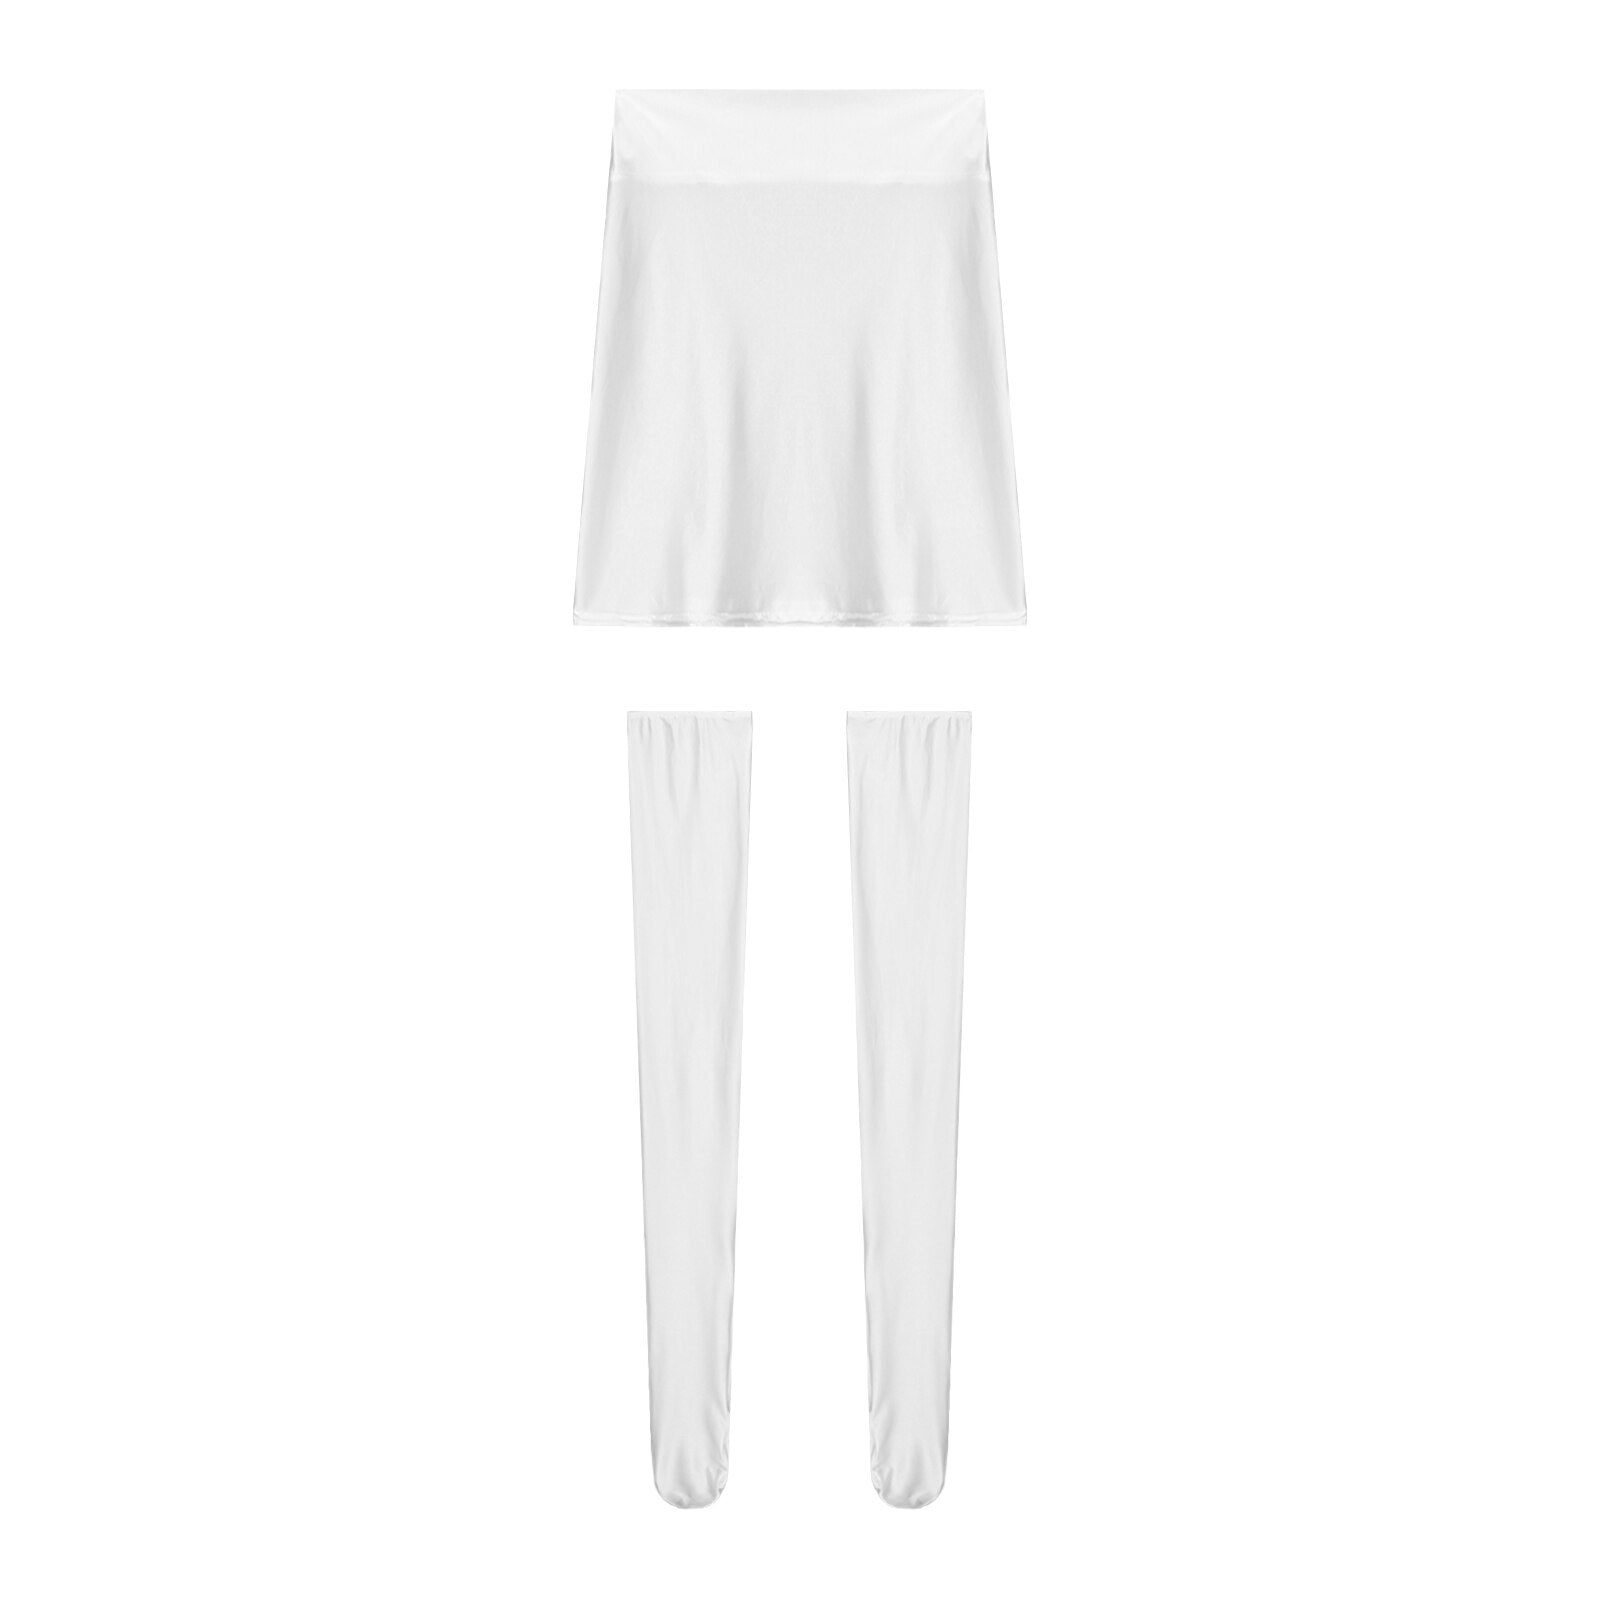 Glossy Mini Skirt Stockings Sets